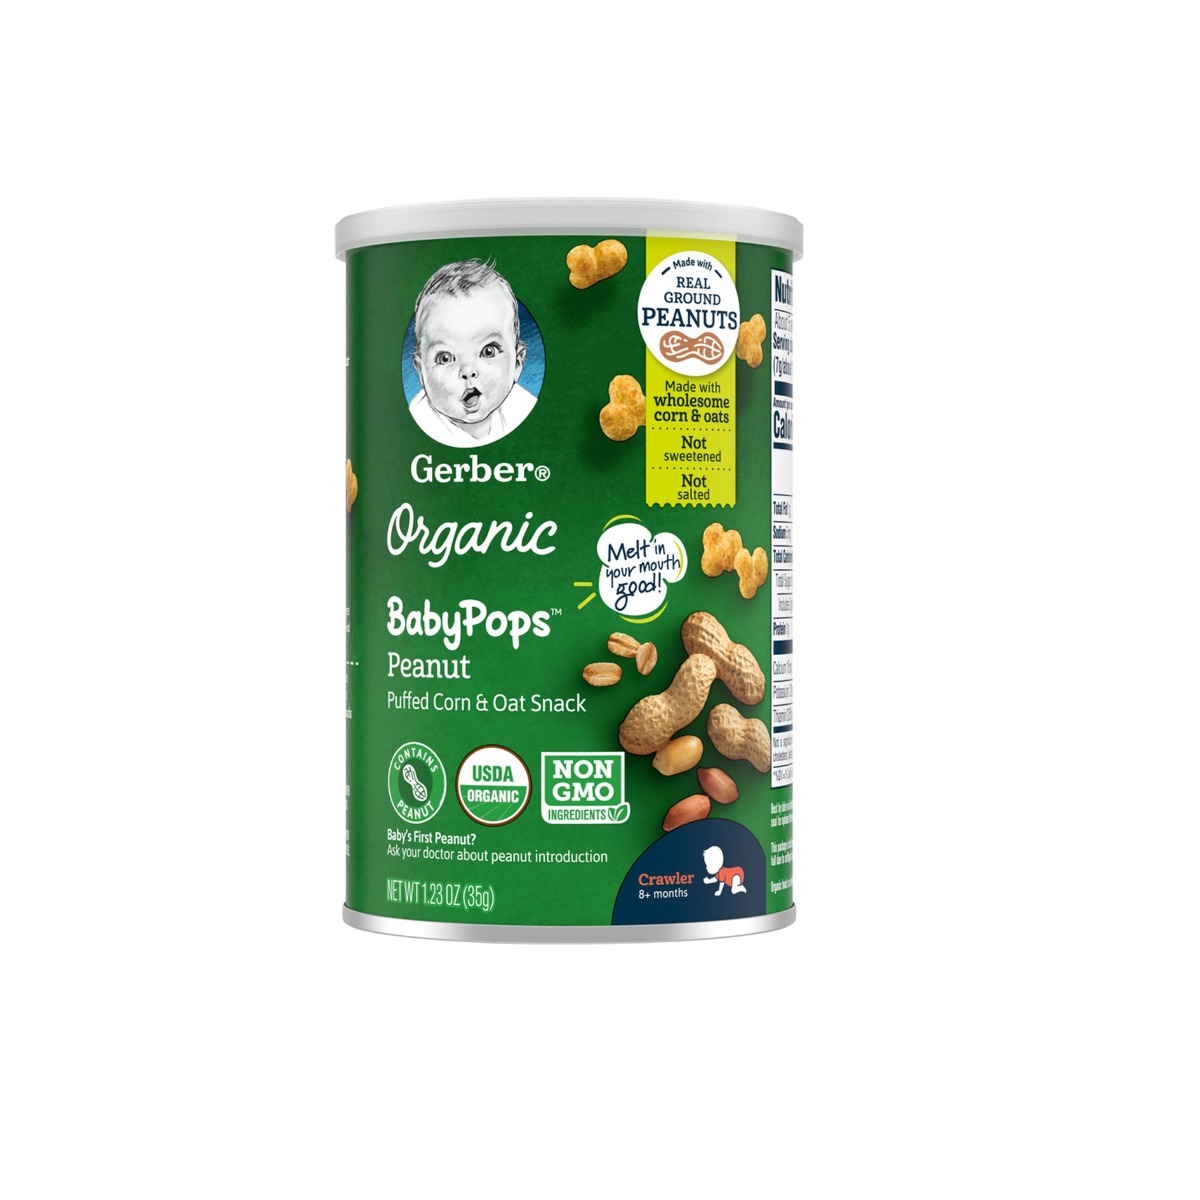 LamboPlace - Gerber Organic BabyPops Peanut 35g Canister